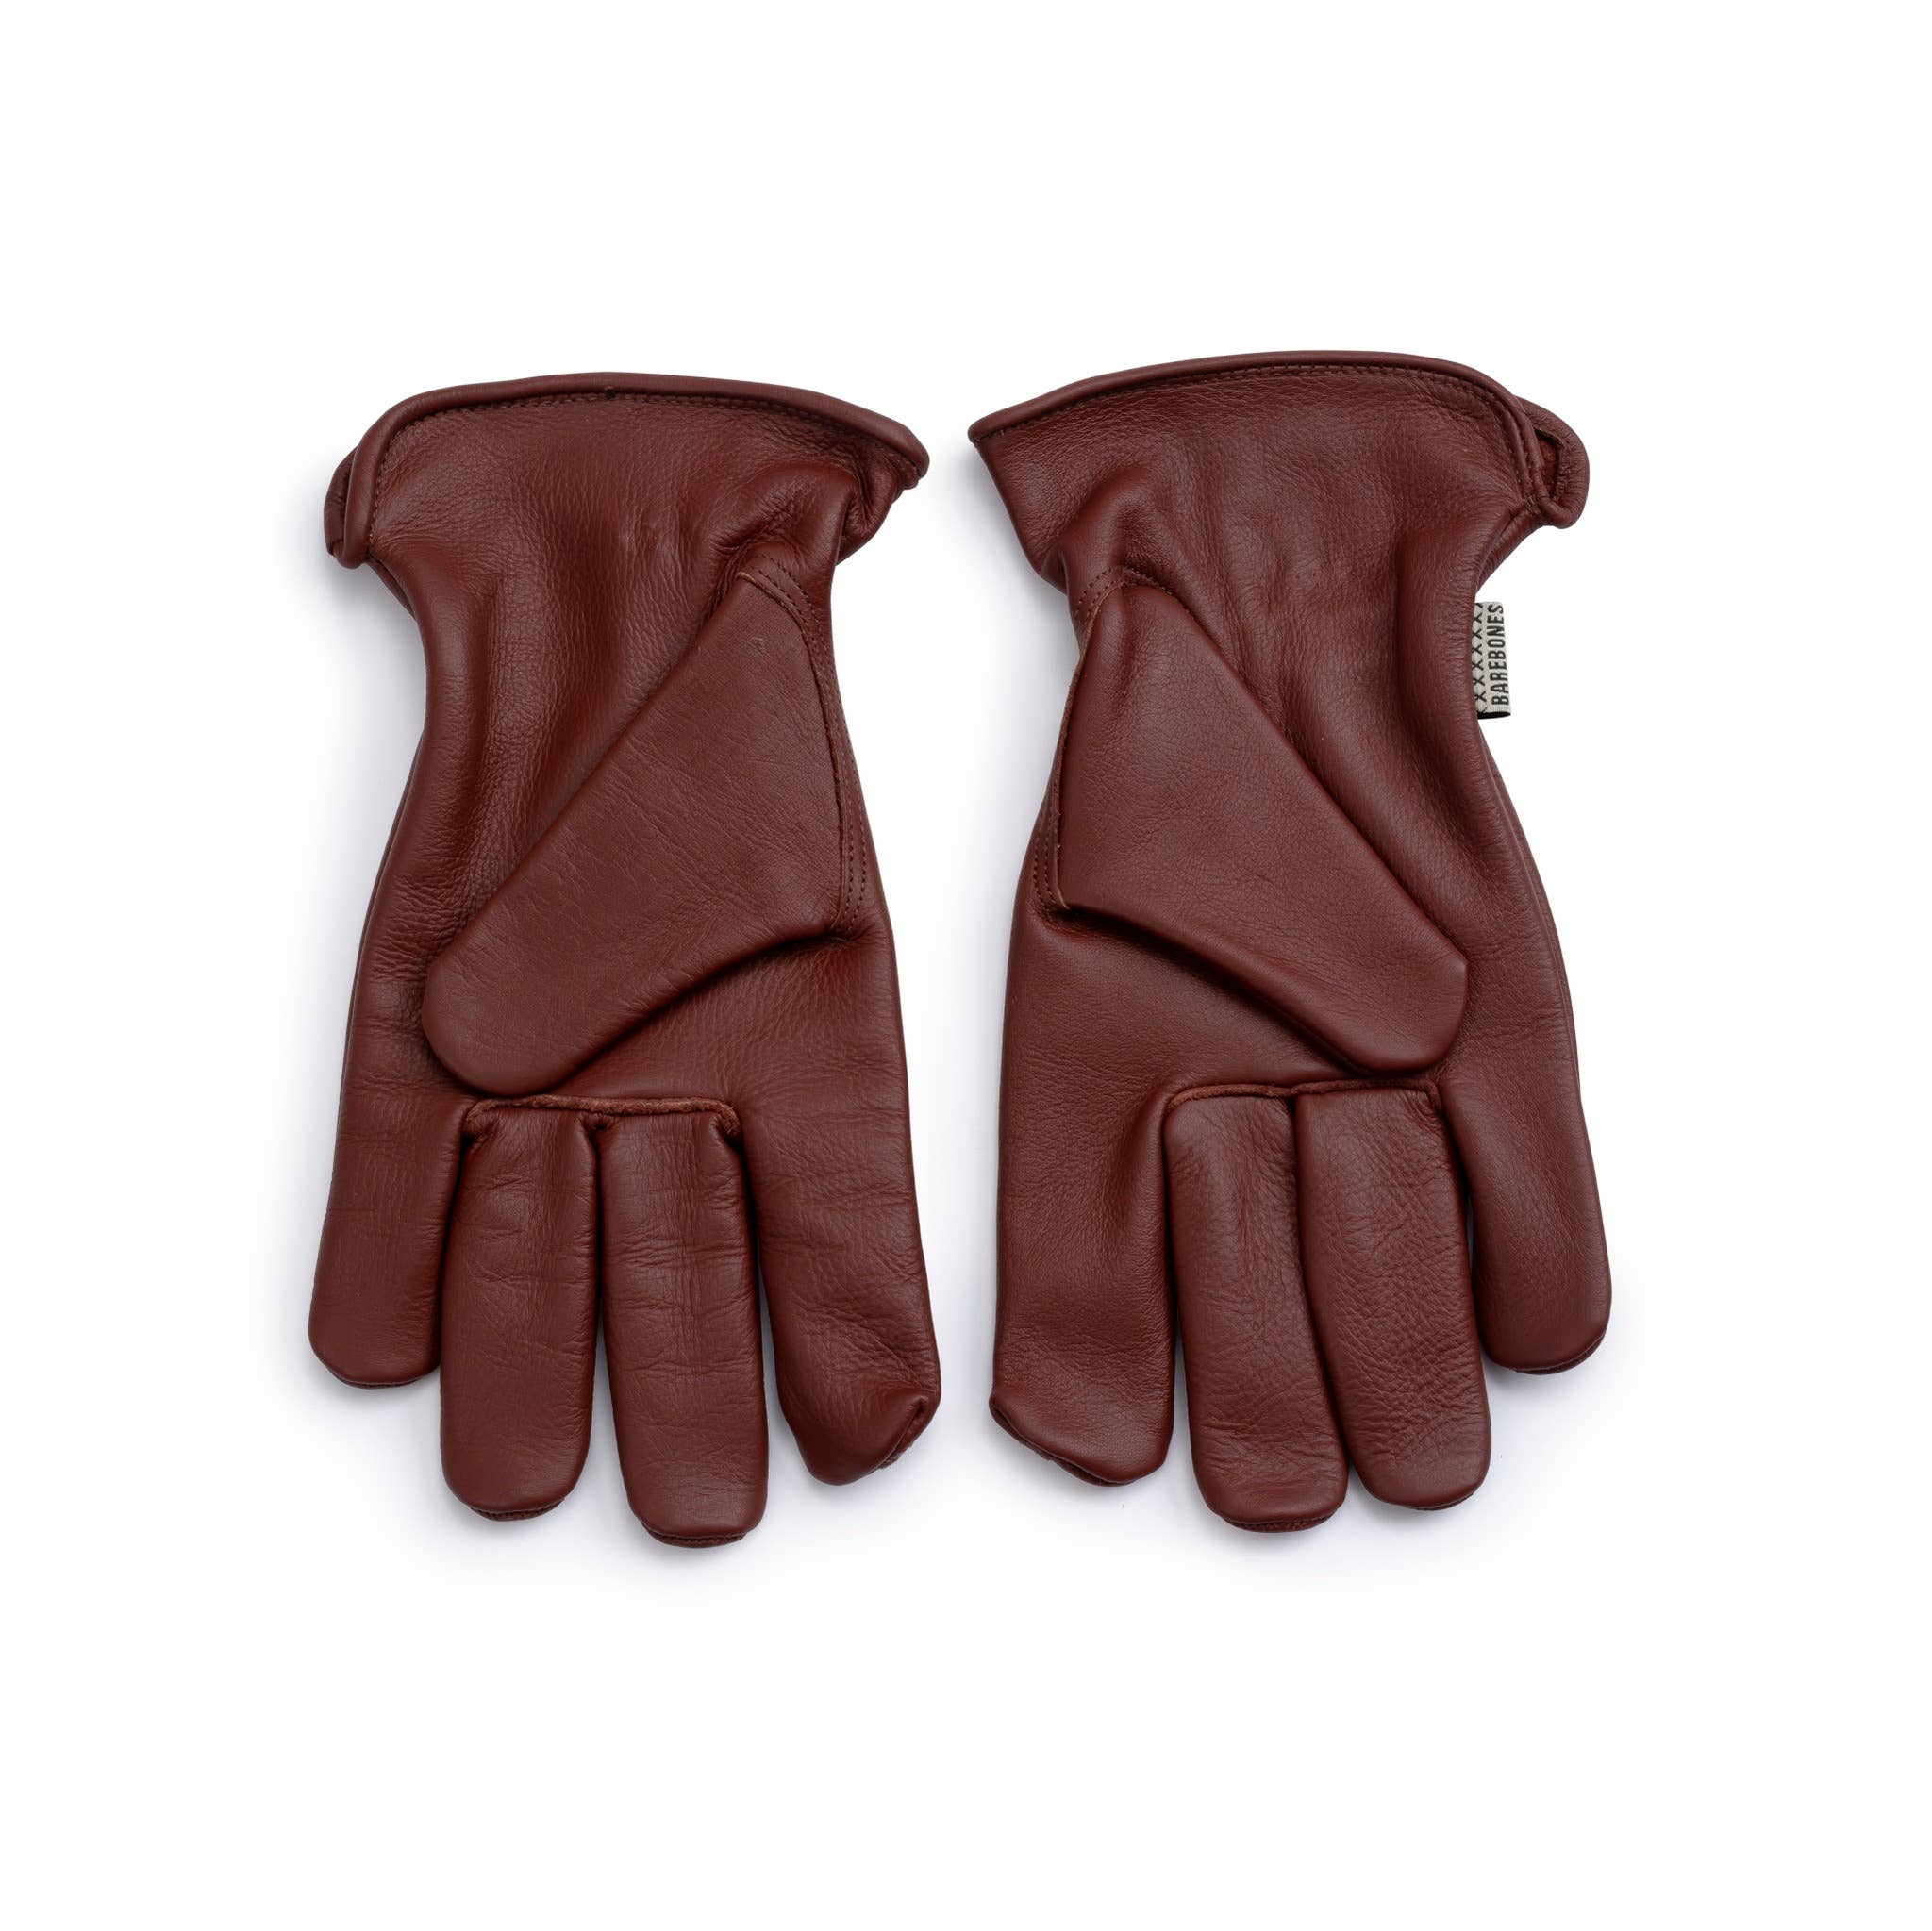 Barebones | Classic Work Glove, Garden, Barebones, Defiance Outdoor Gear Co.